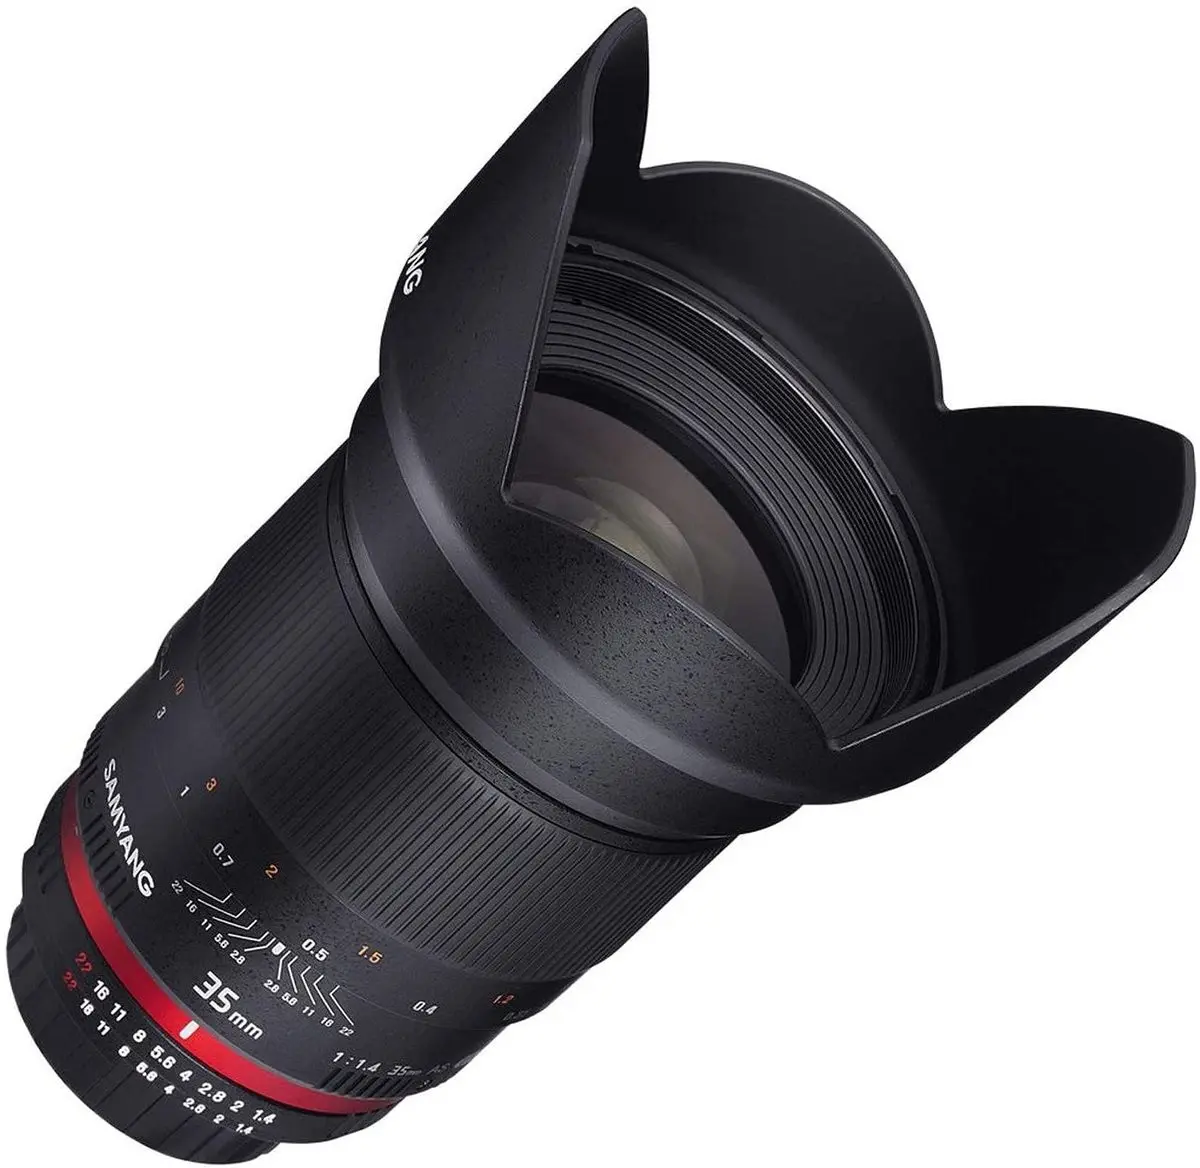 2. Samyang 35mm f/1.4 AS UMC (Canon AE Version) Lens